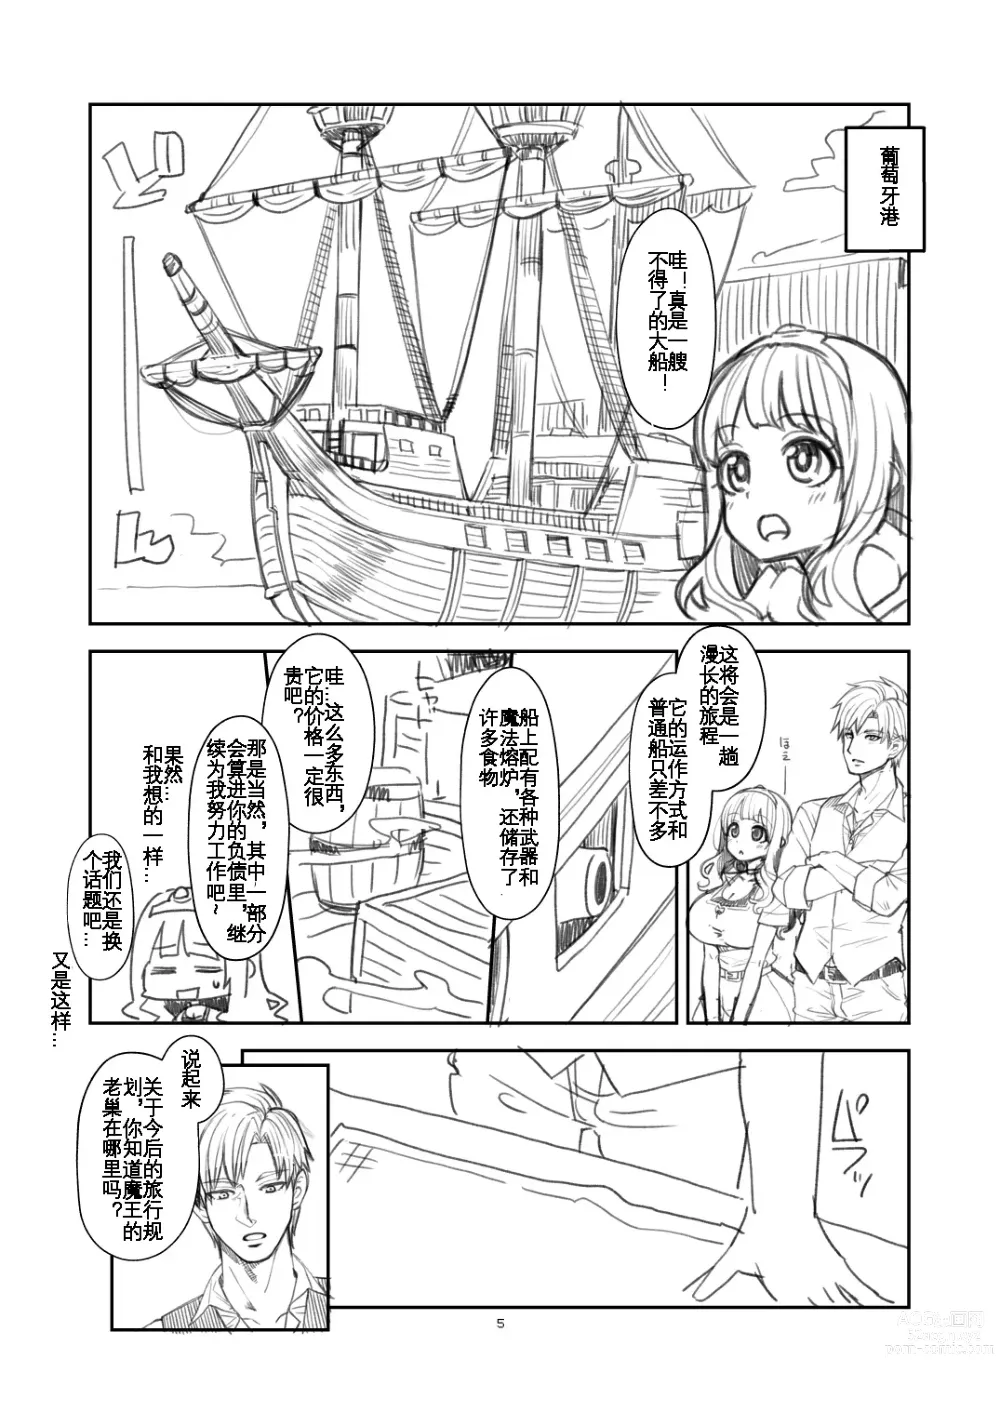 Page 5 of doujinshi Benmusu Bouken no Sho 13